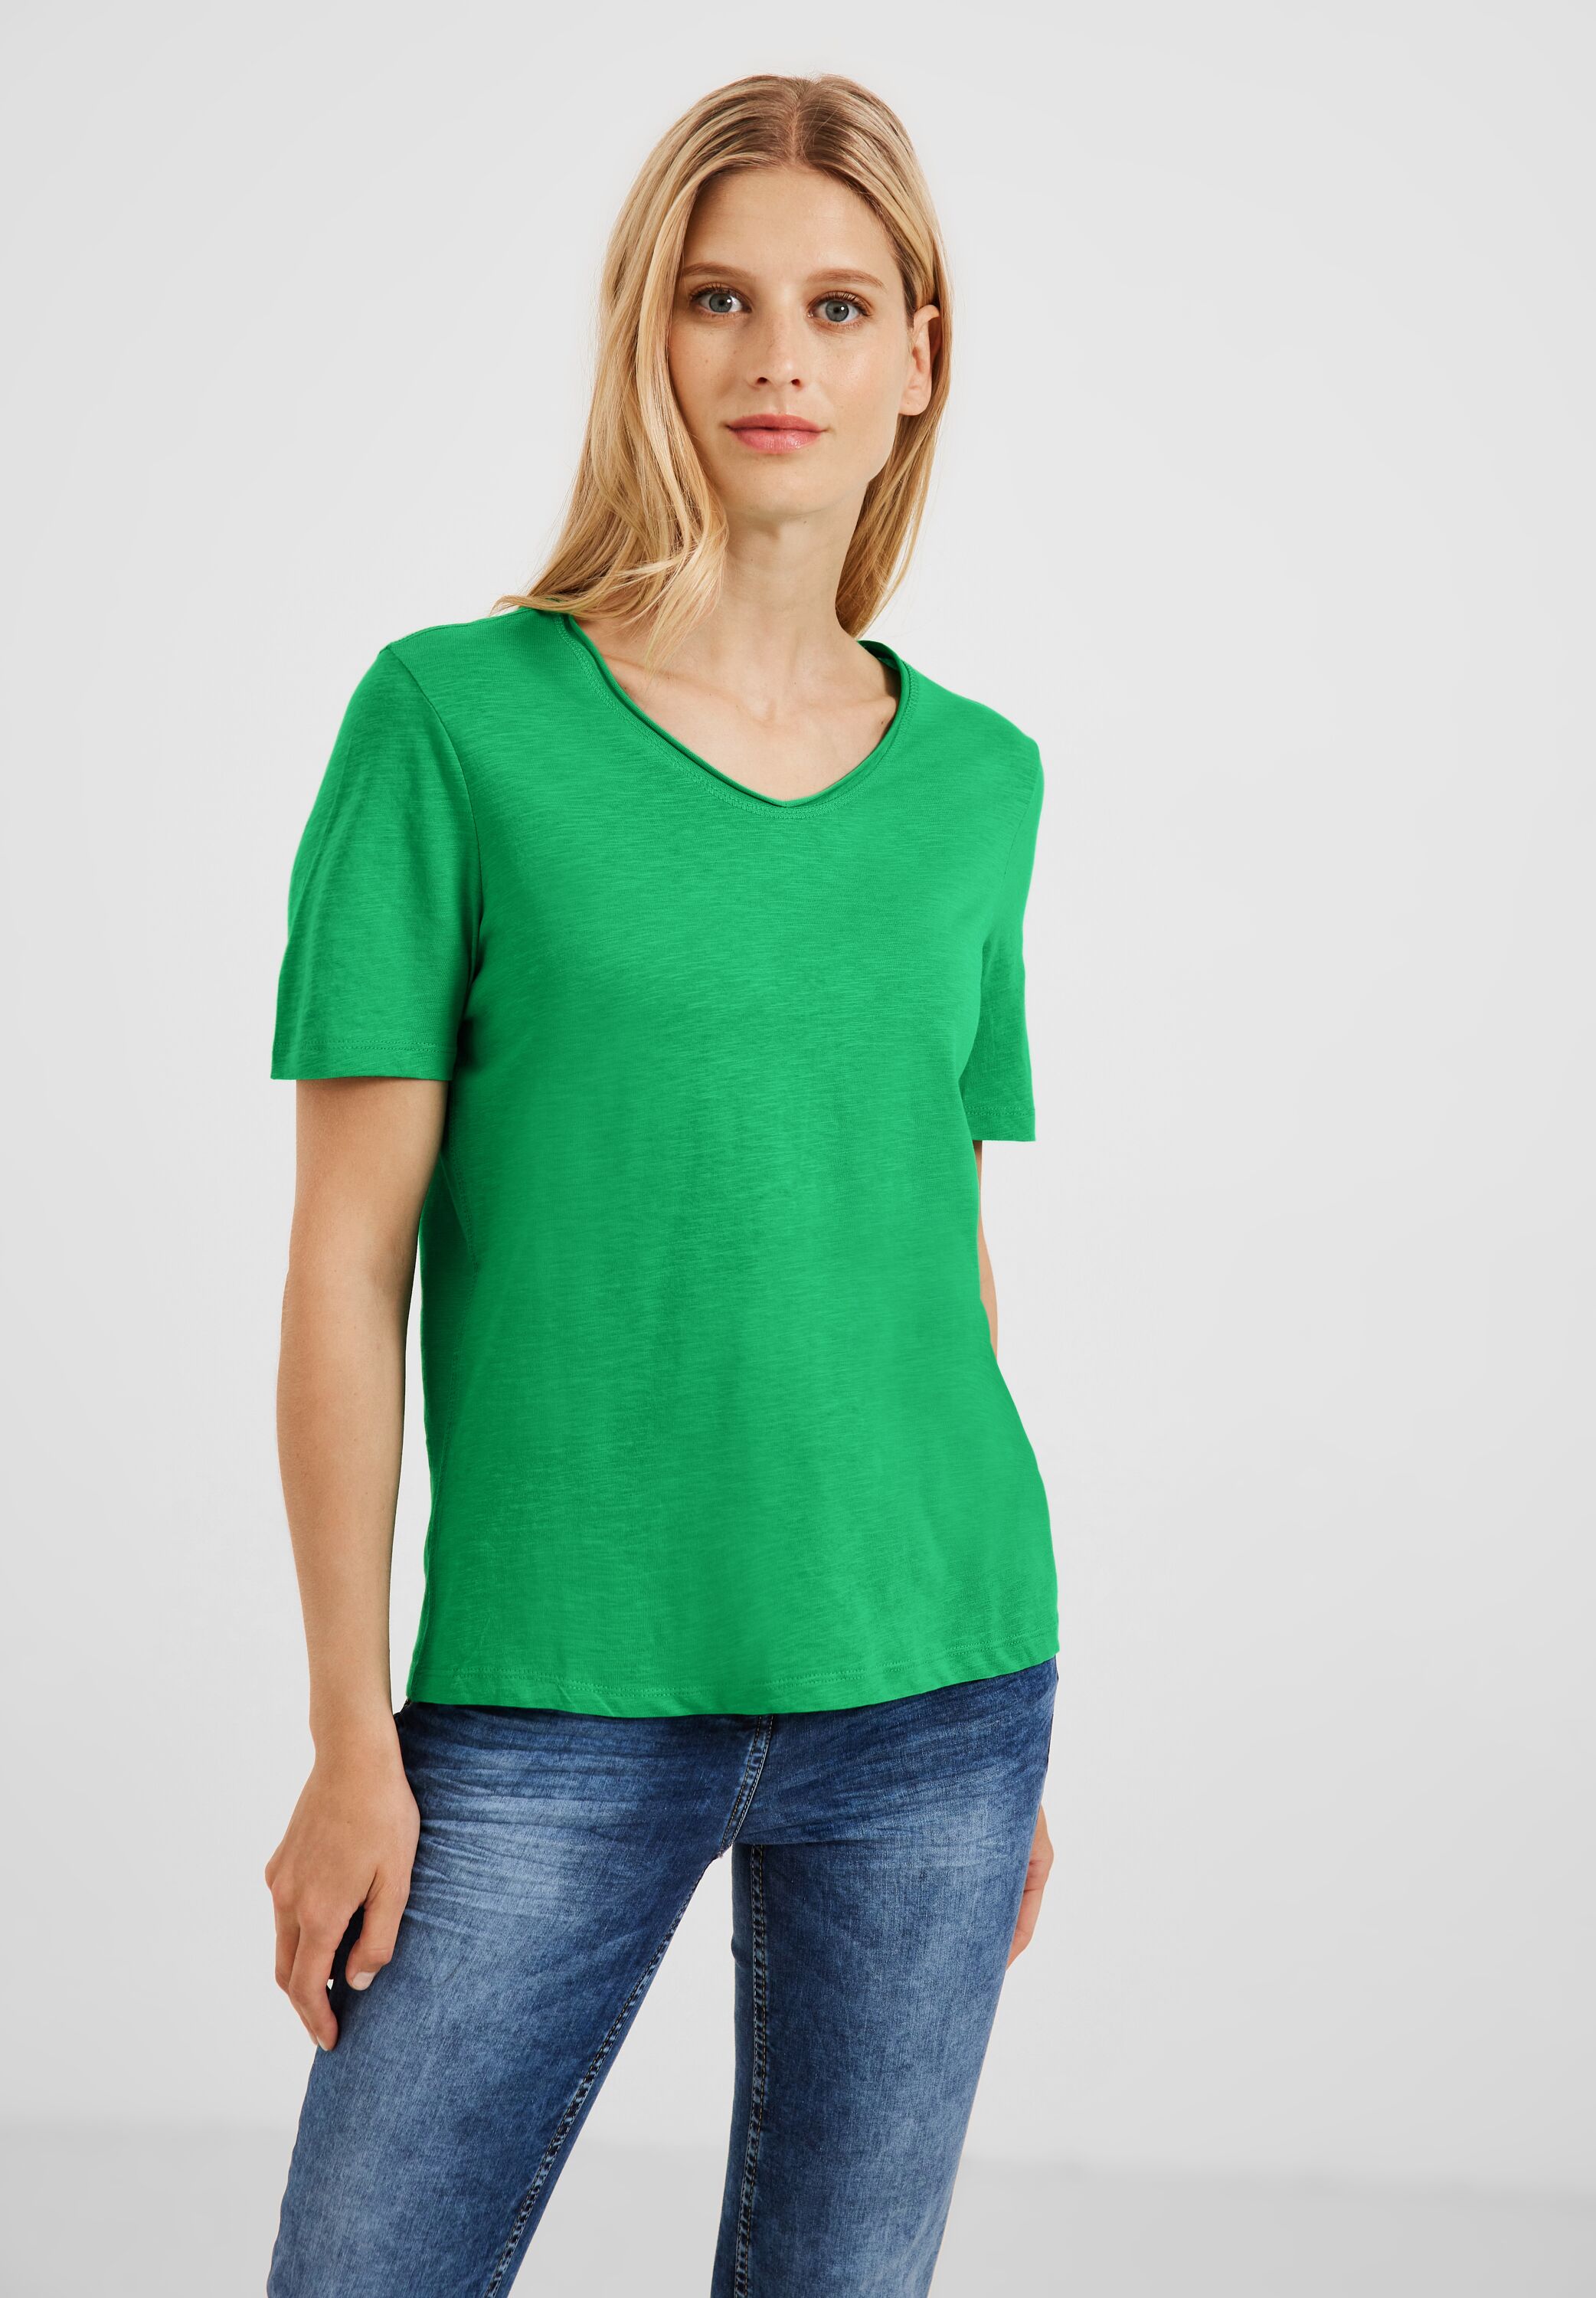 CECIL T-Shirt in Fresh Green im SALE reduziert B319372-14794 - CONCEPT Mode